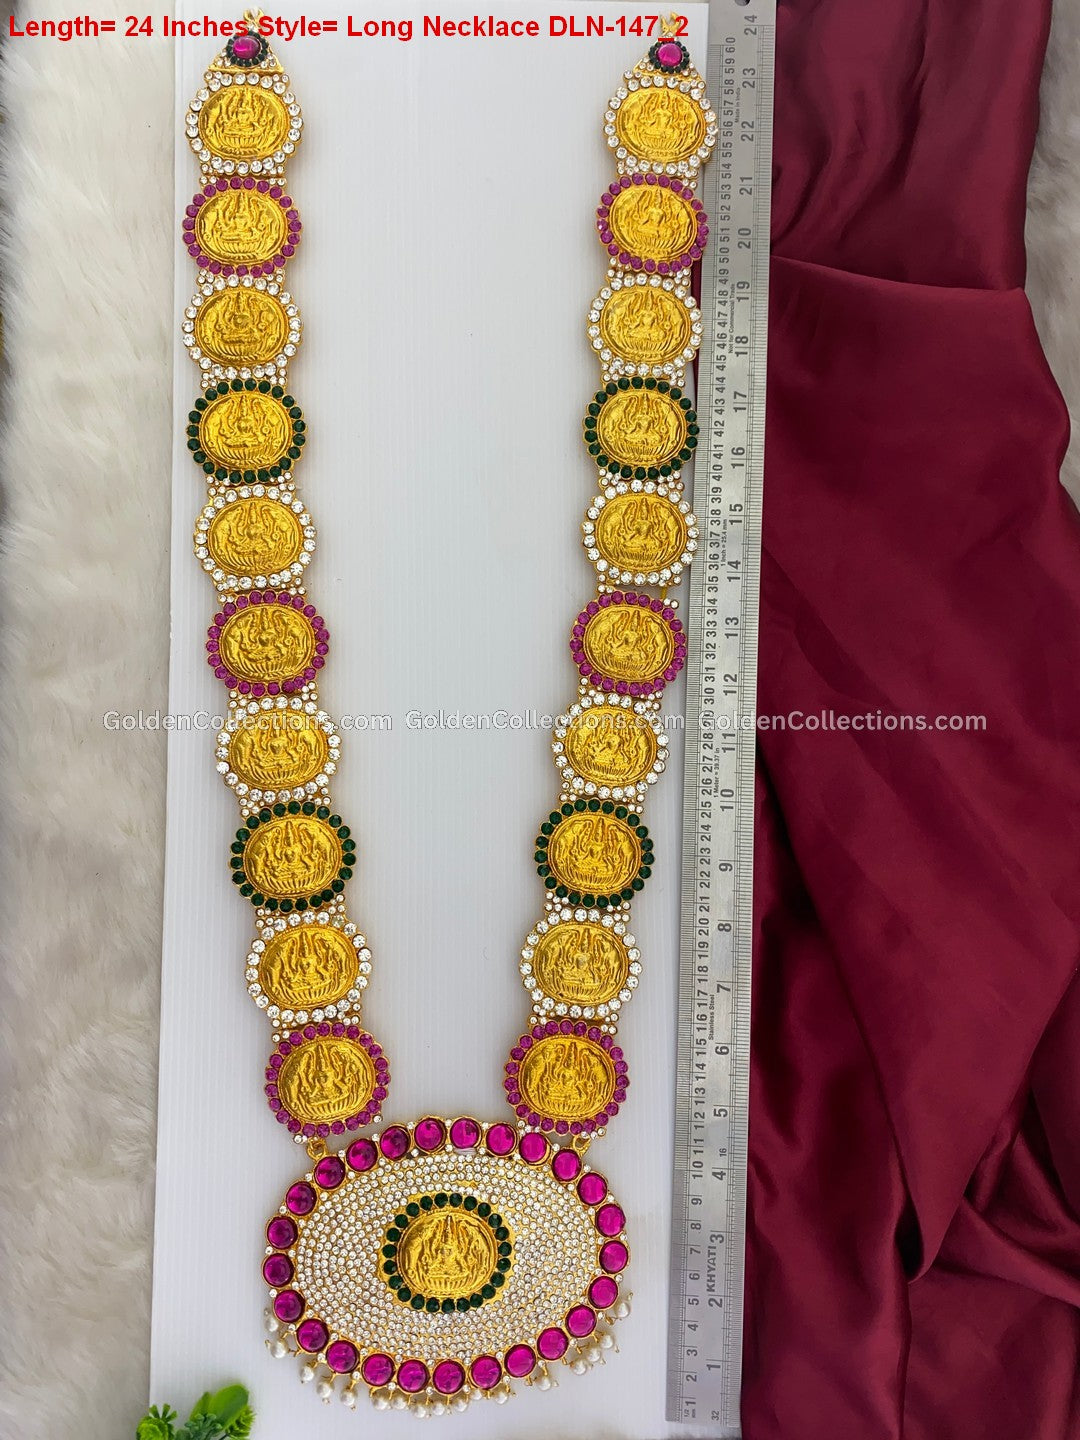 Intricate Divine Lakshmi Jewellery - DLN-147 2